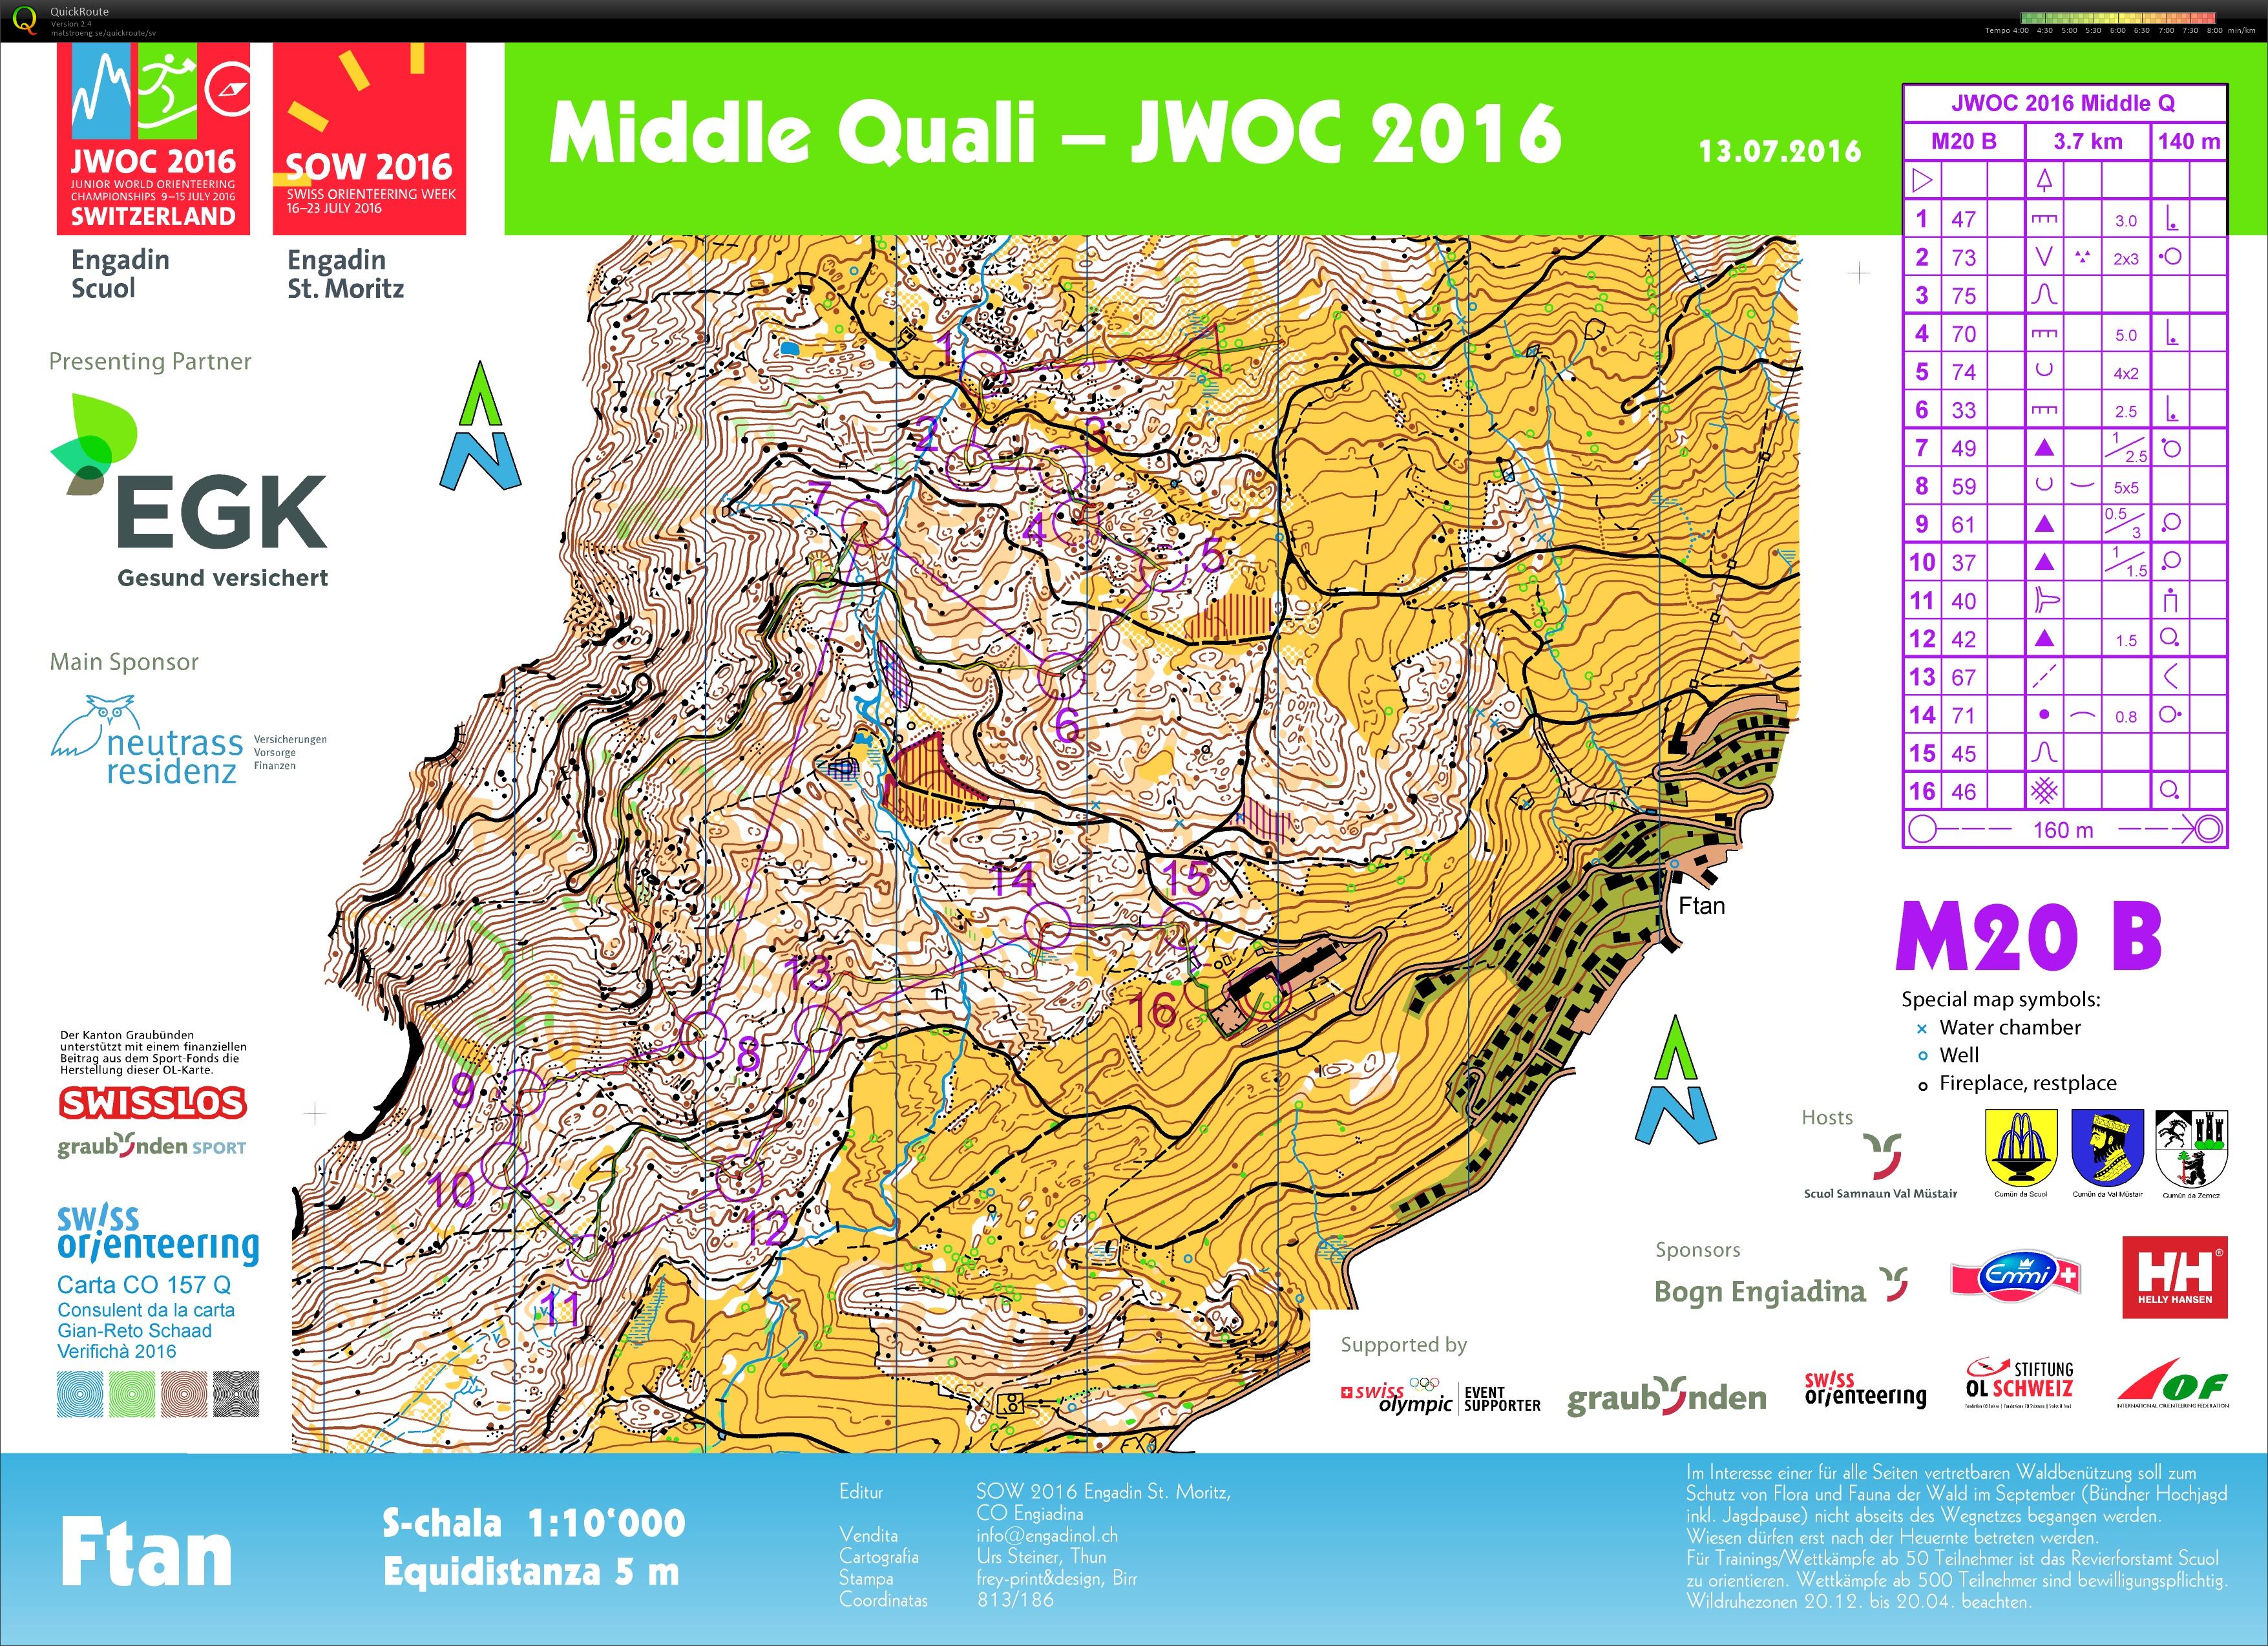 JWOC Middle Qualification heat B (13.07.2016)